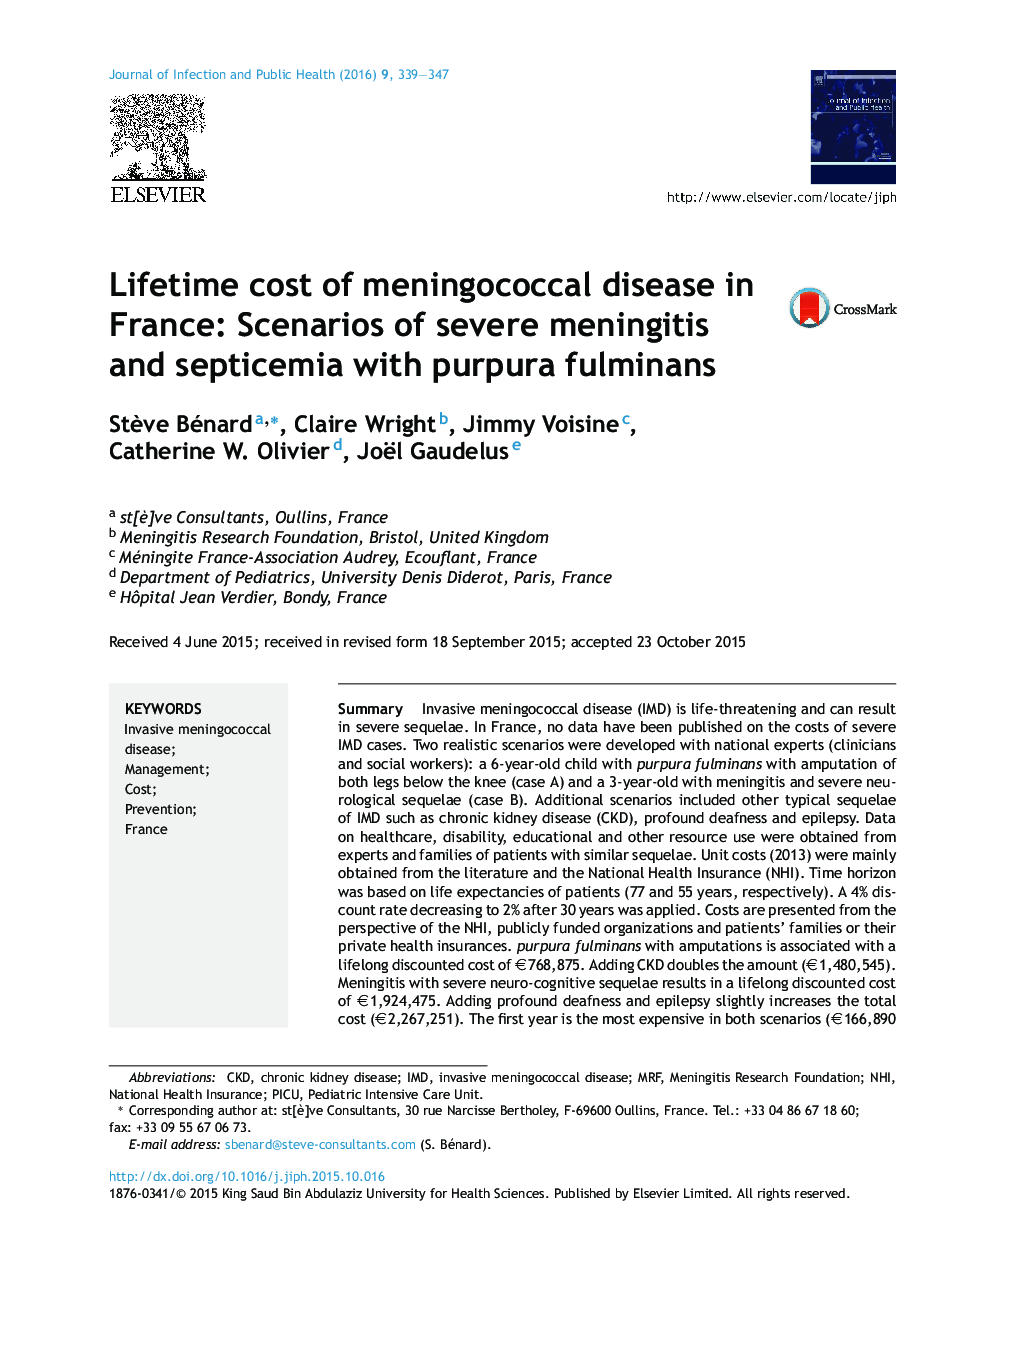 Lifetime cost of meningococcal disease in France: Scenarios of severe meningitis and septicemia with purpura fulminans